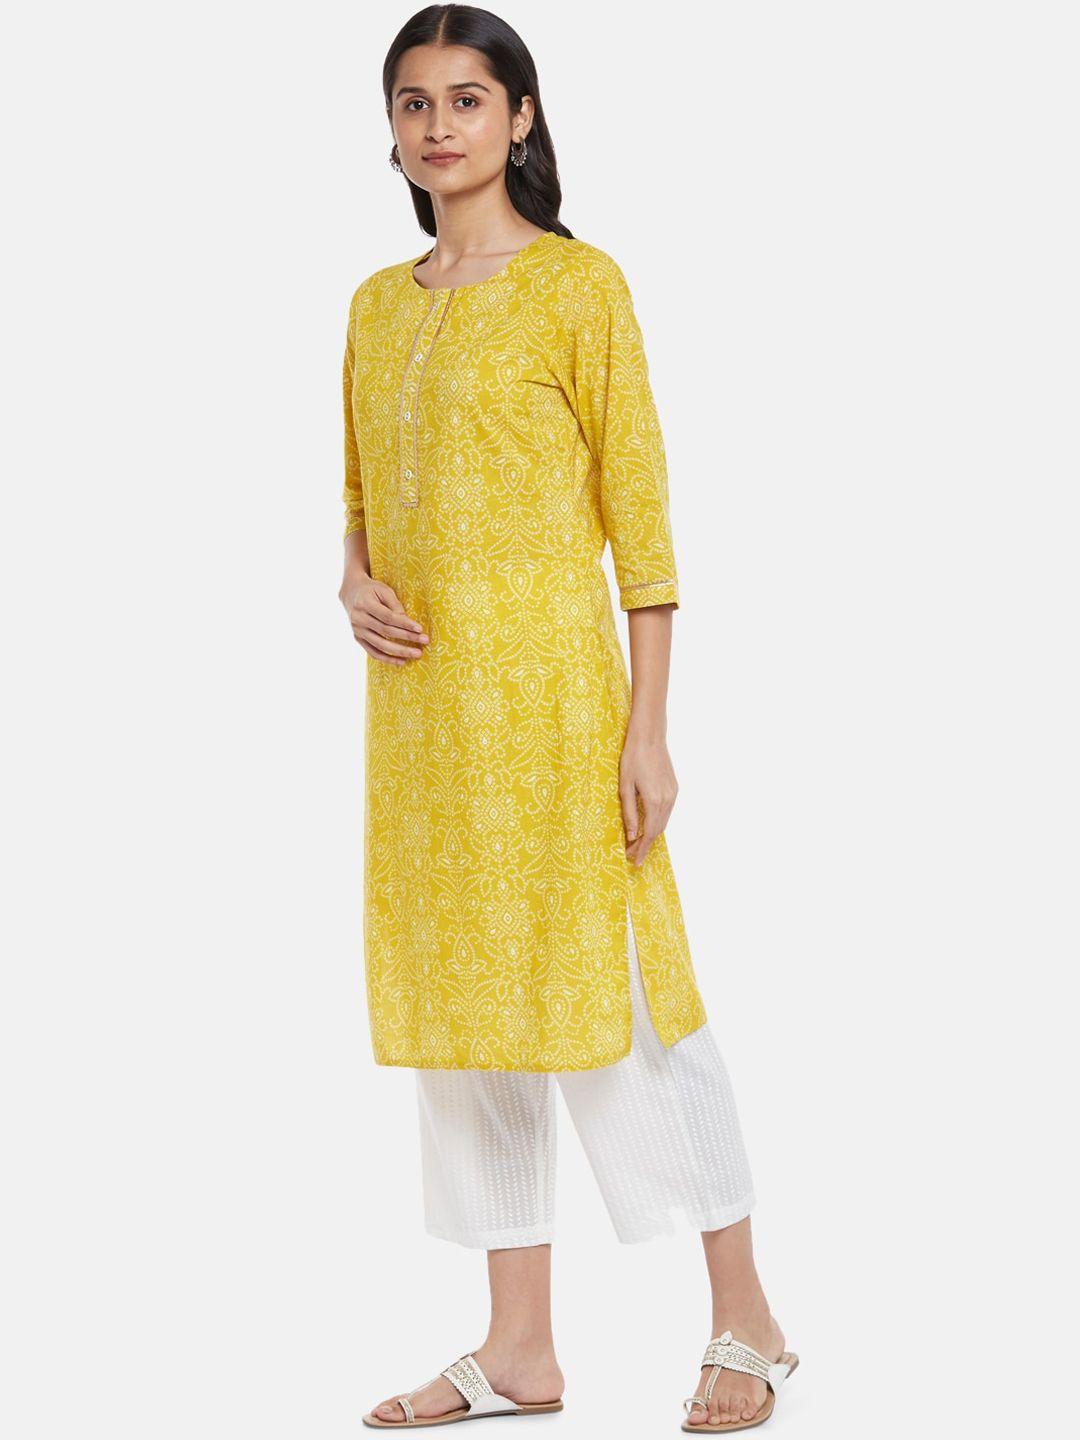 rangmanch-by-pantaloons-women-yellow-bandhani-printed-pure-cotton-kurta-with-trousers